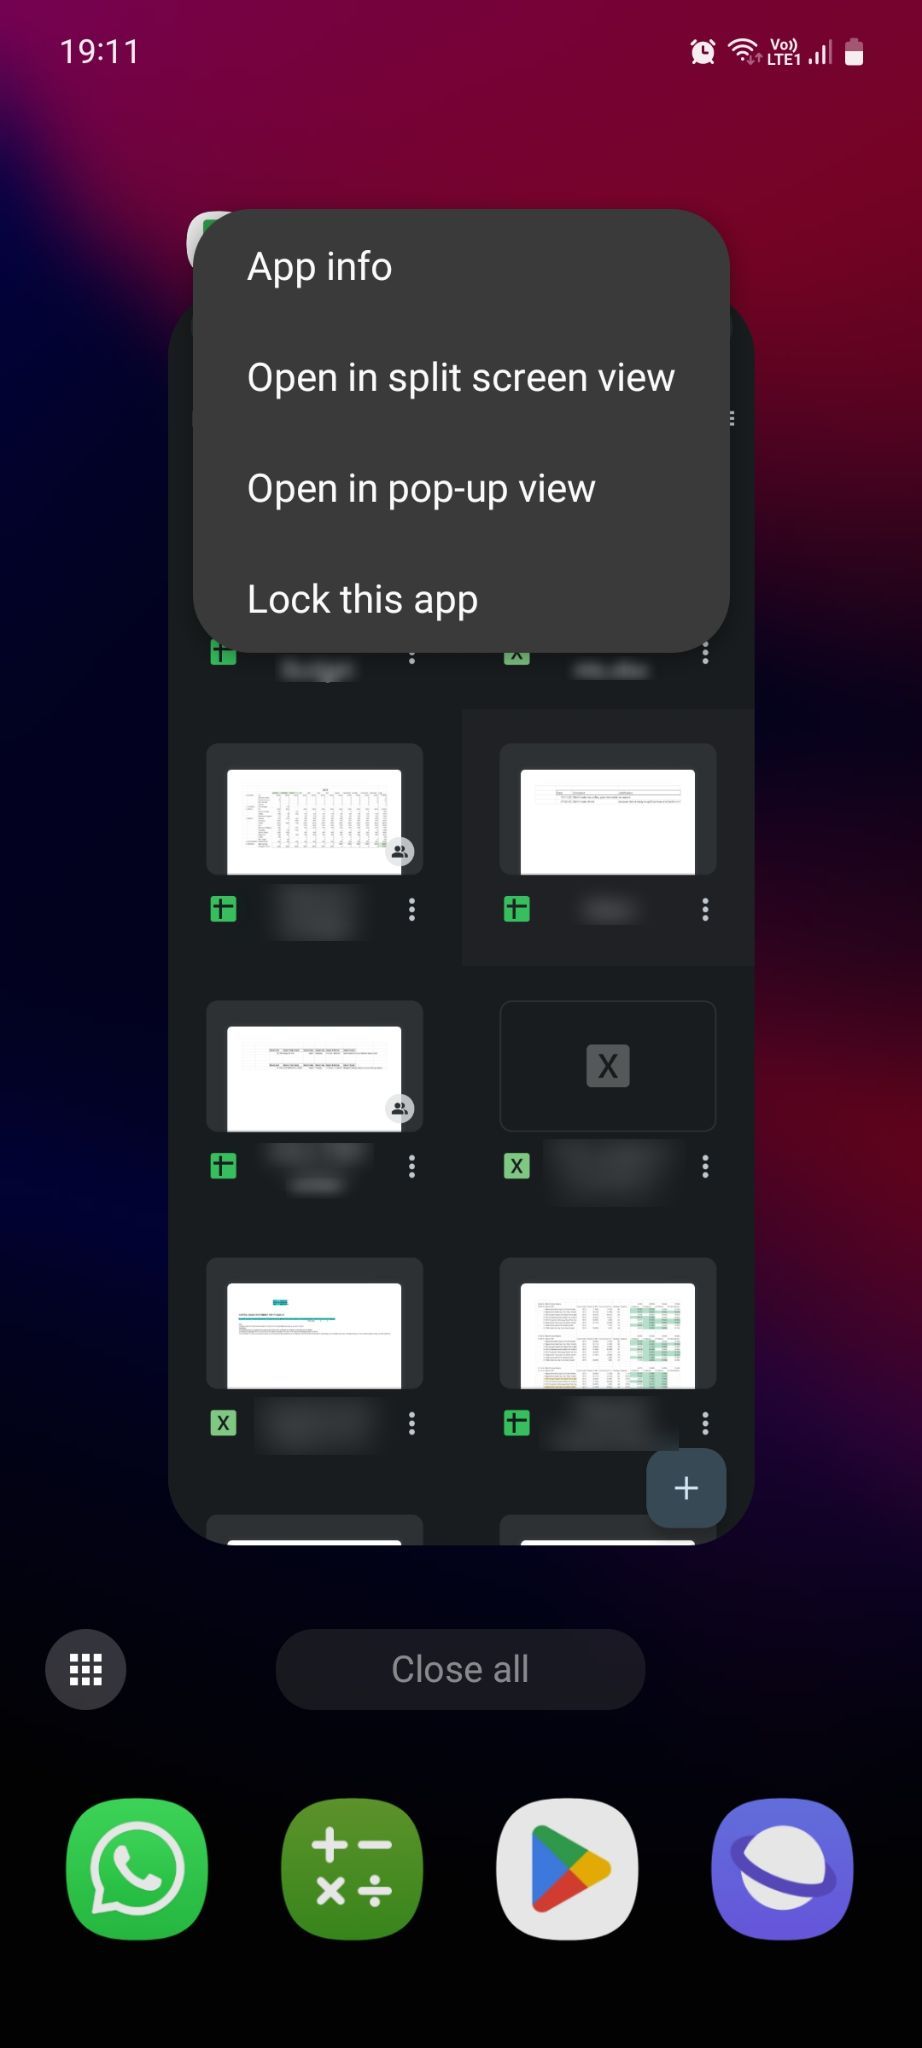 Samsung Recent apps screen options